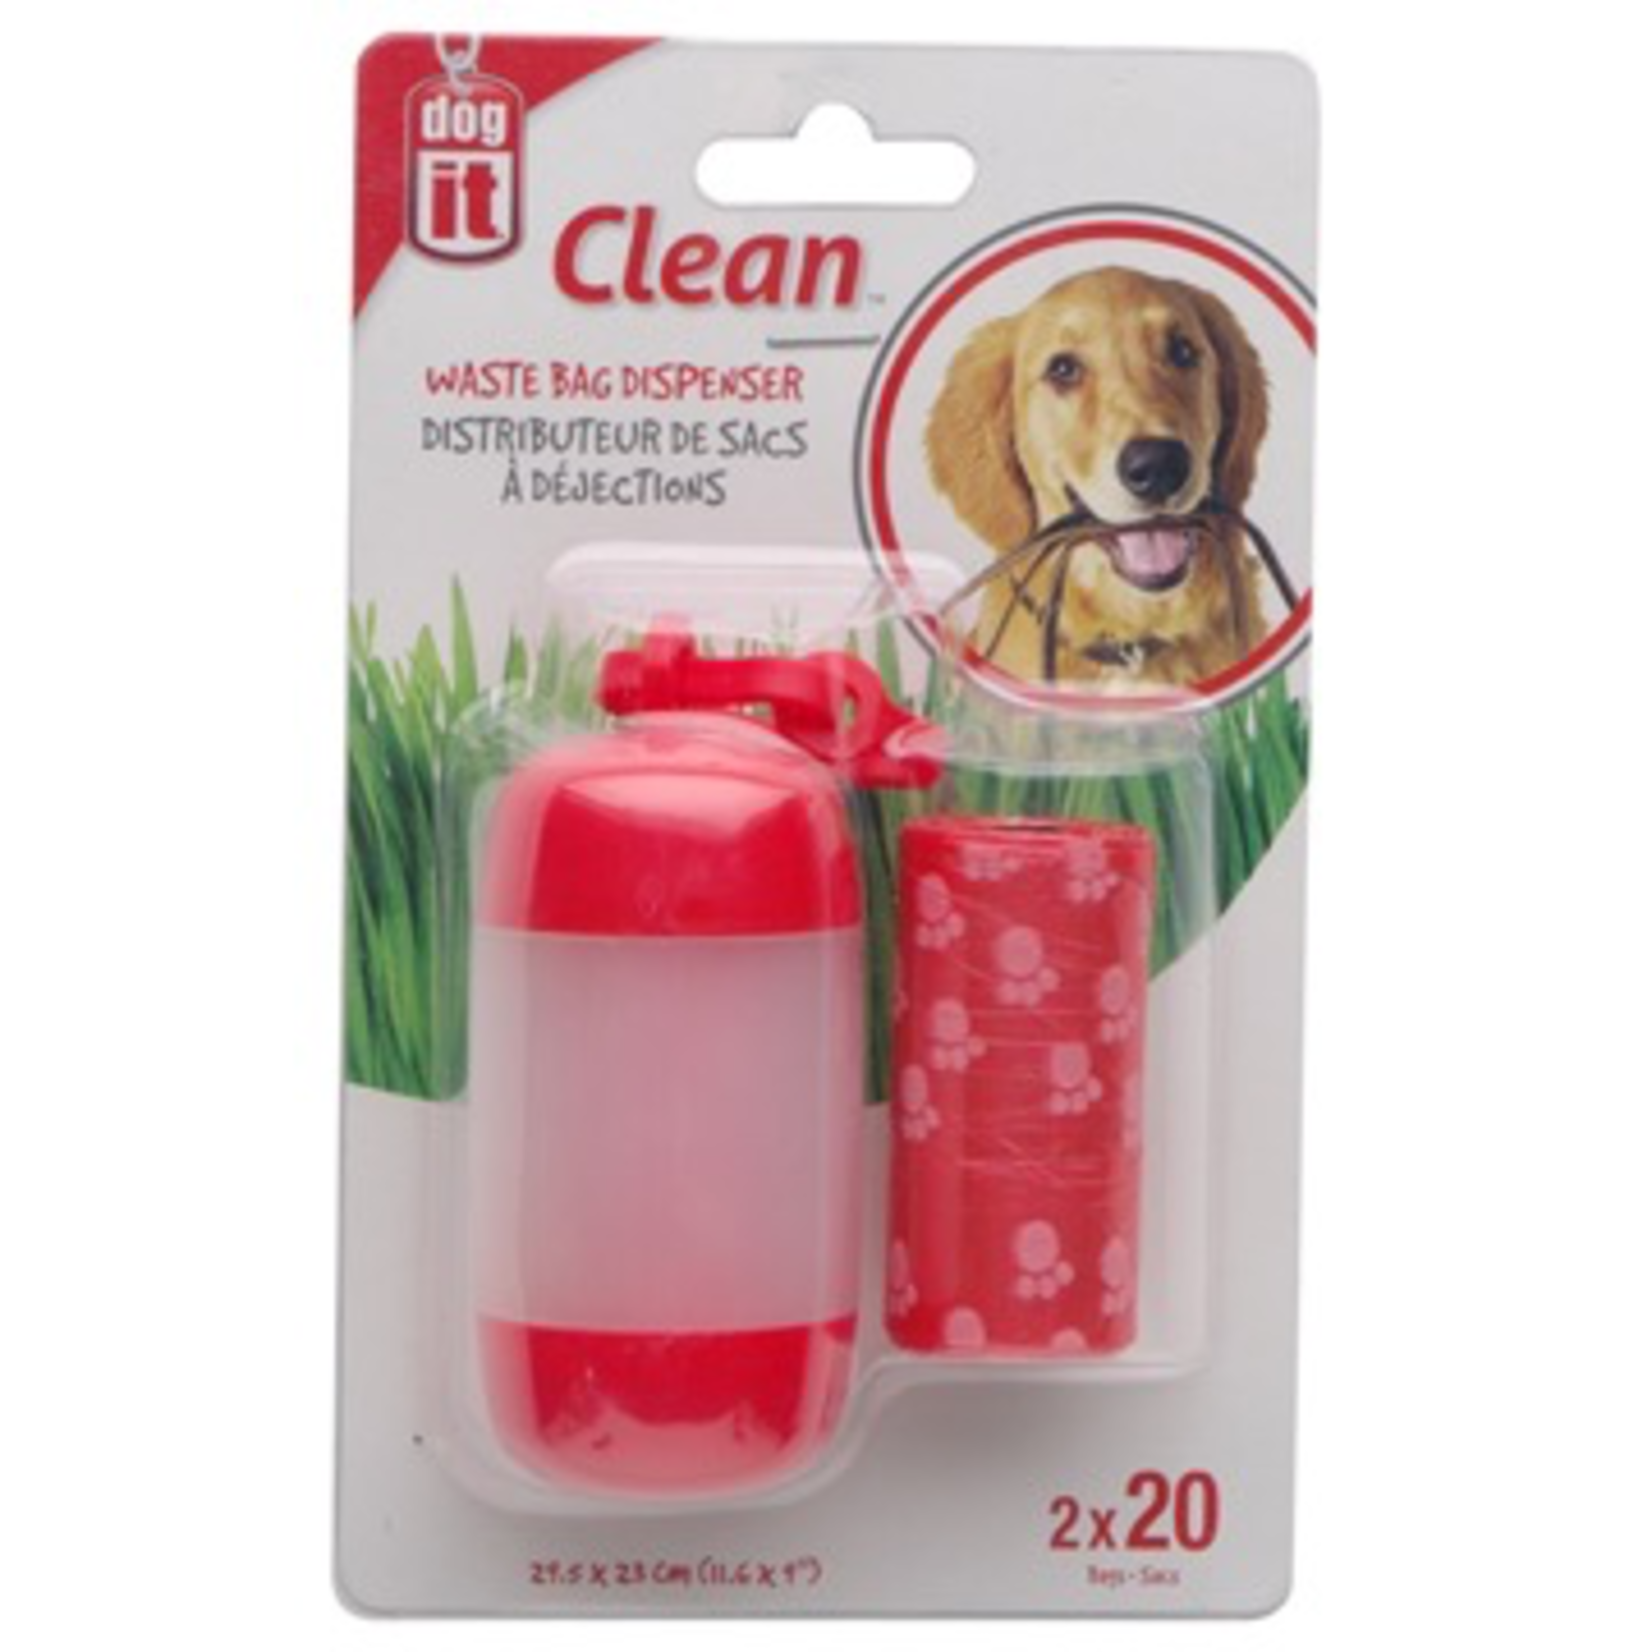 DOG IT Dogit Bag Dispenser - 2 Rolls/20 Bags - 29.5 x 23 cm (11.6 x 9 in) - Red